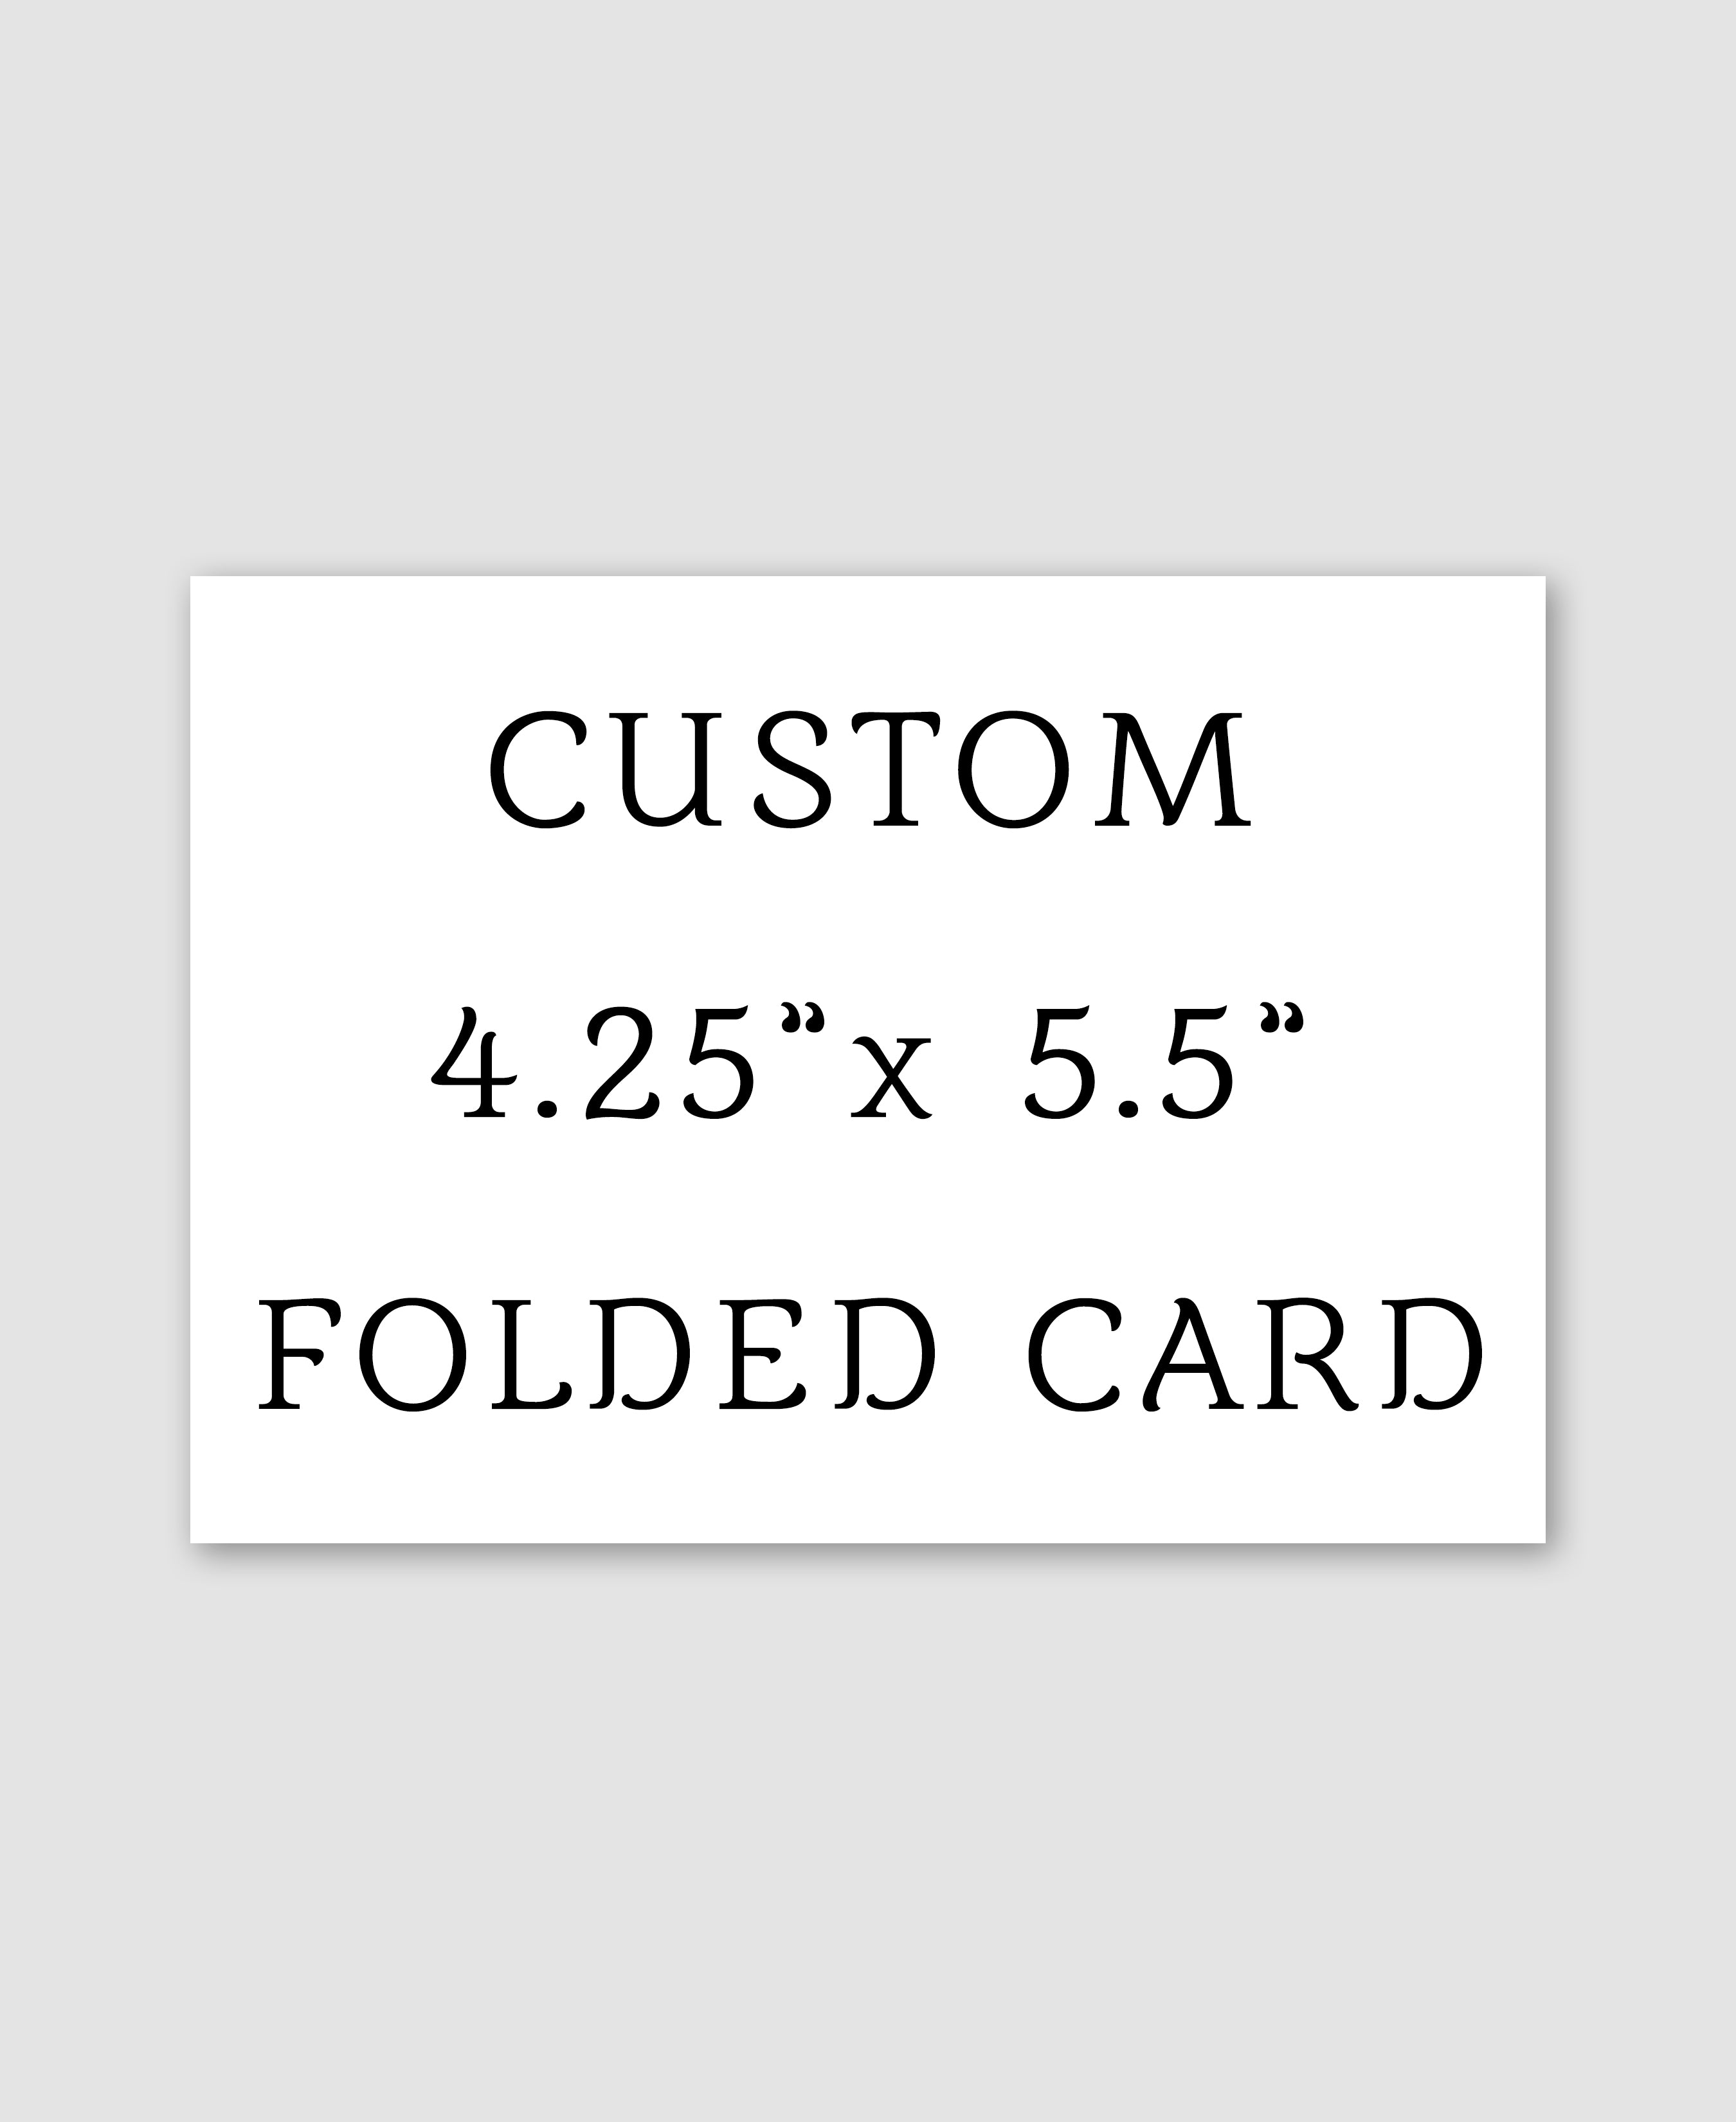 Folded Card